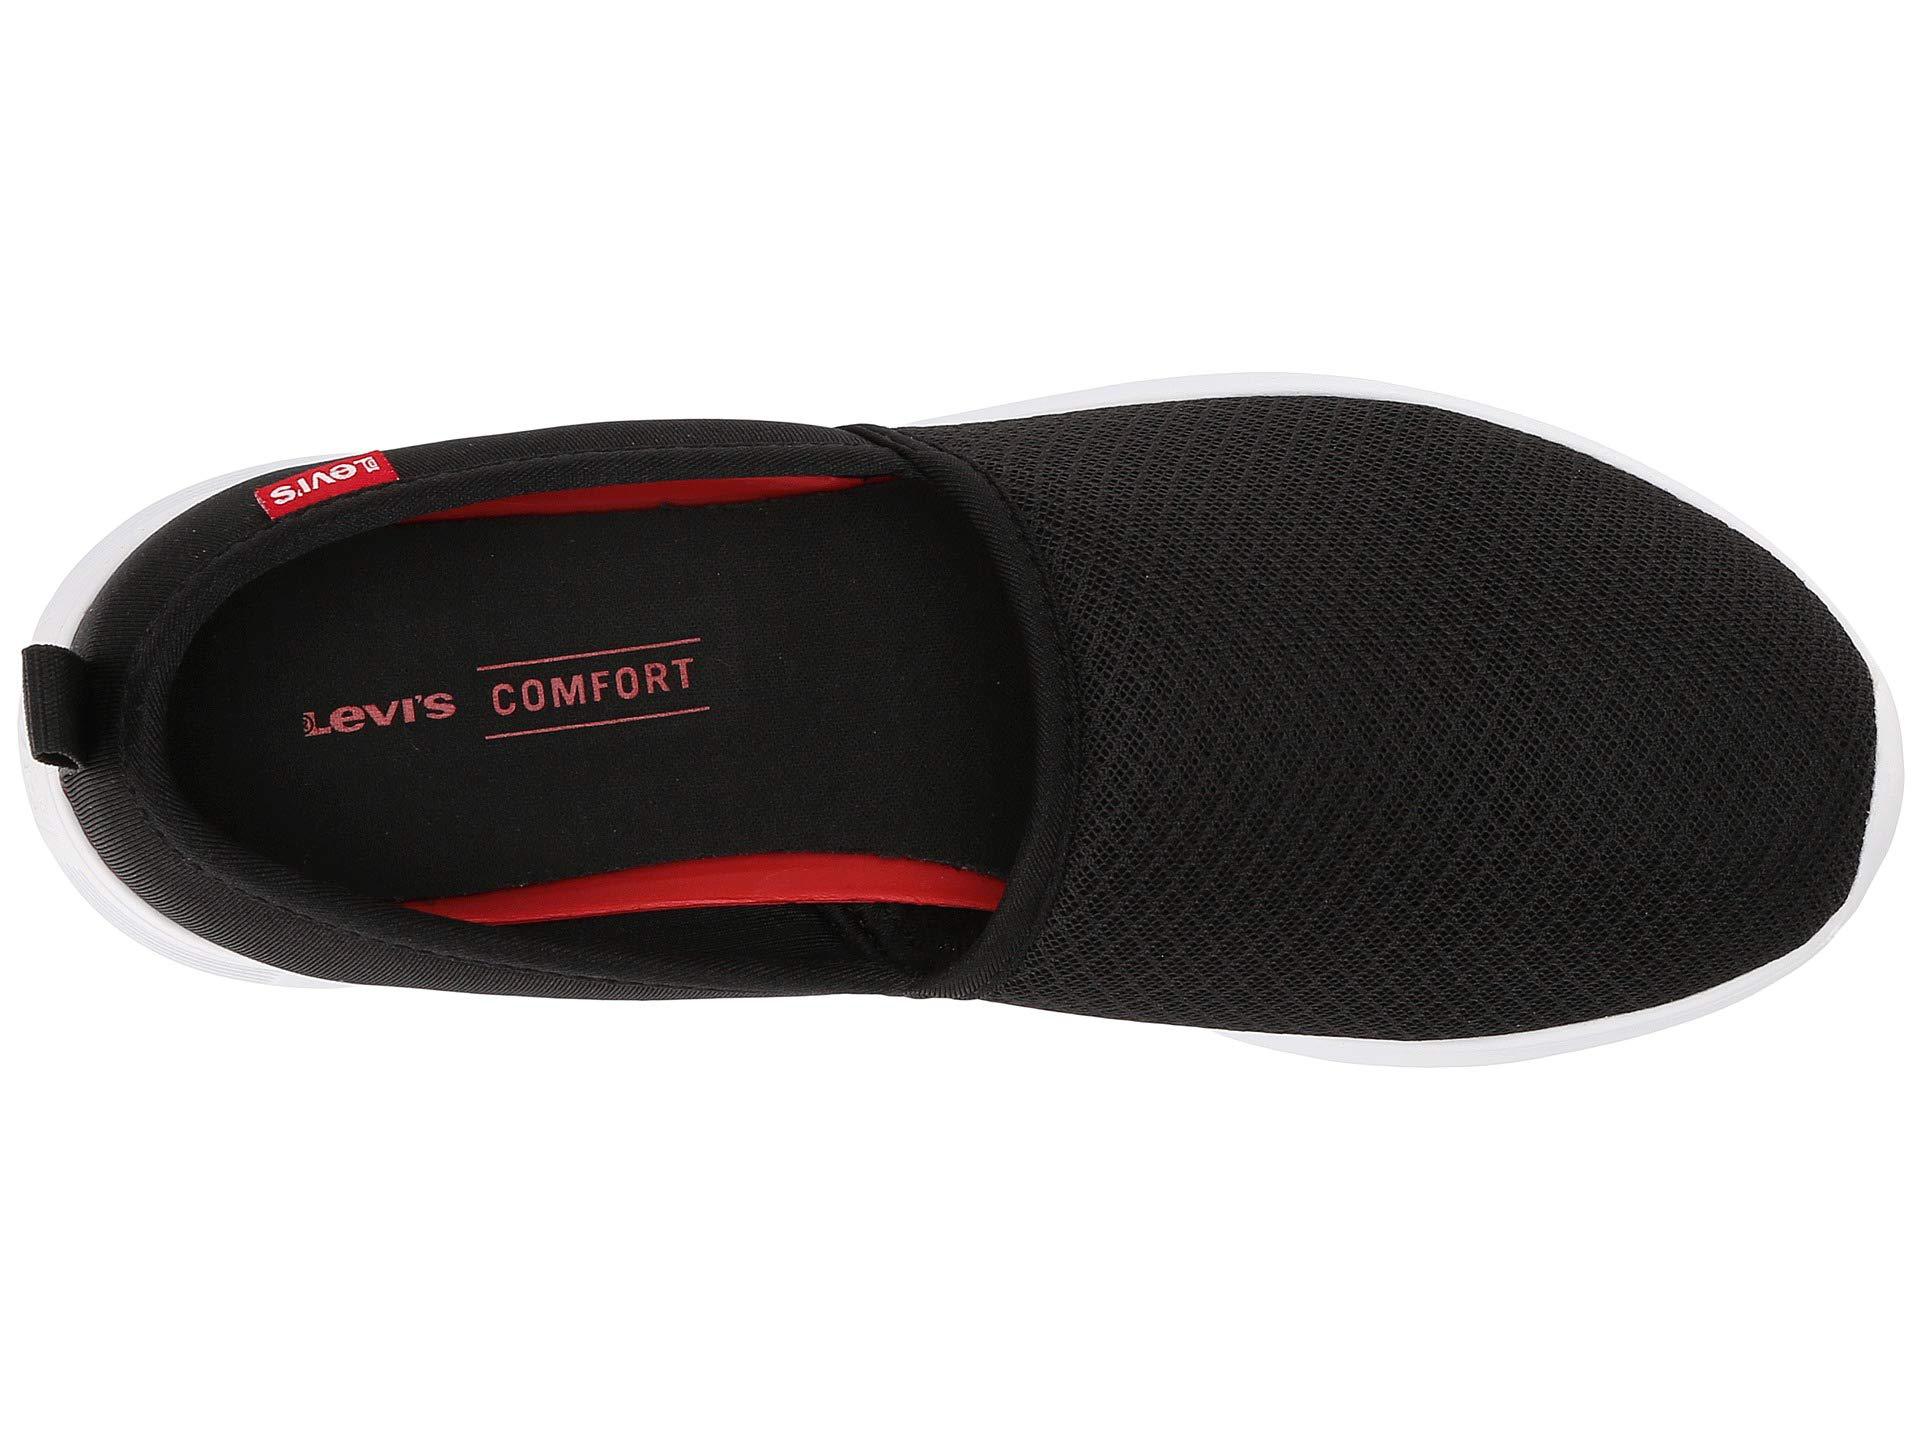 levi's comfort womens shoes